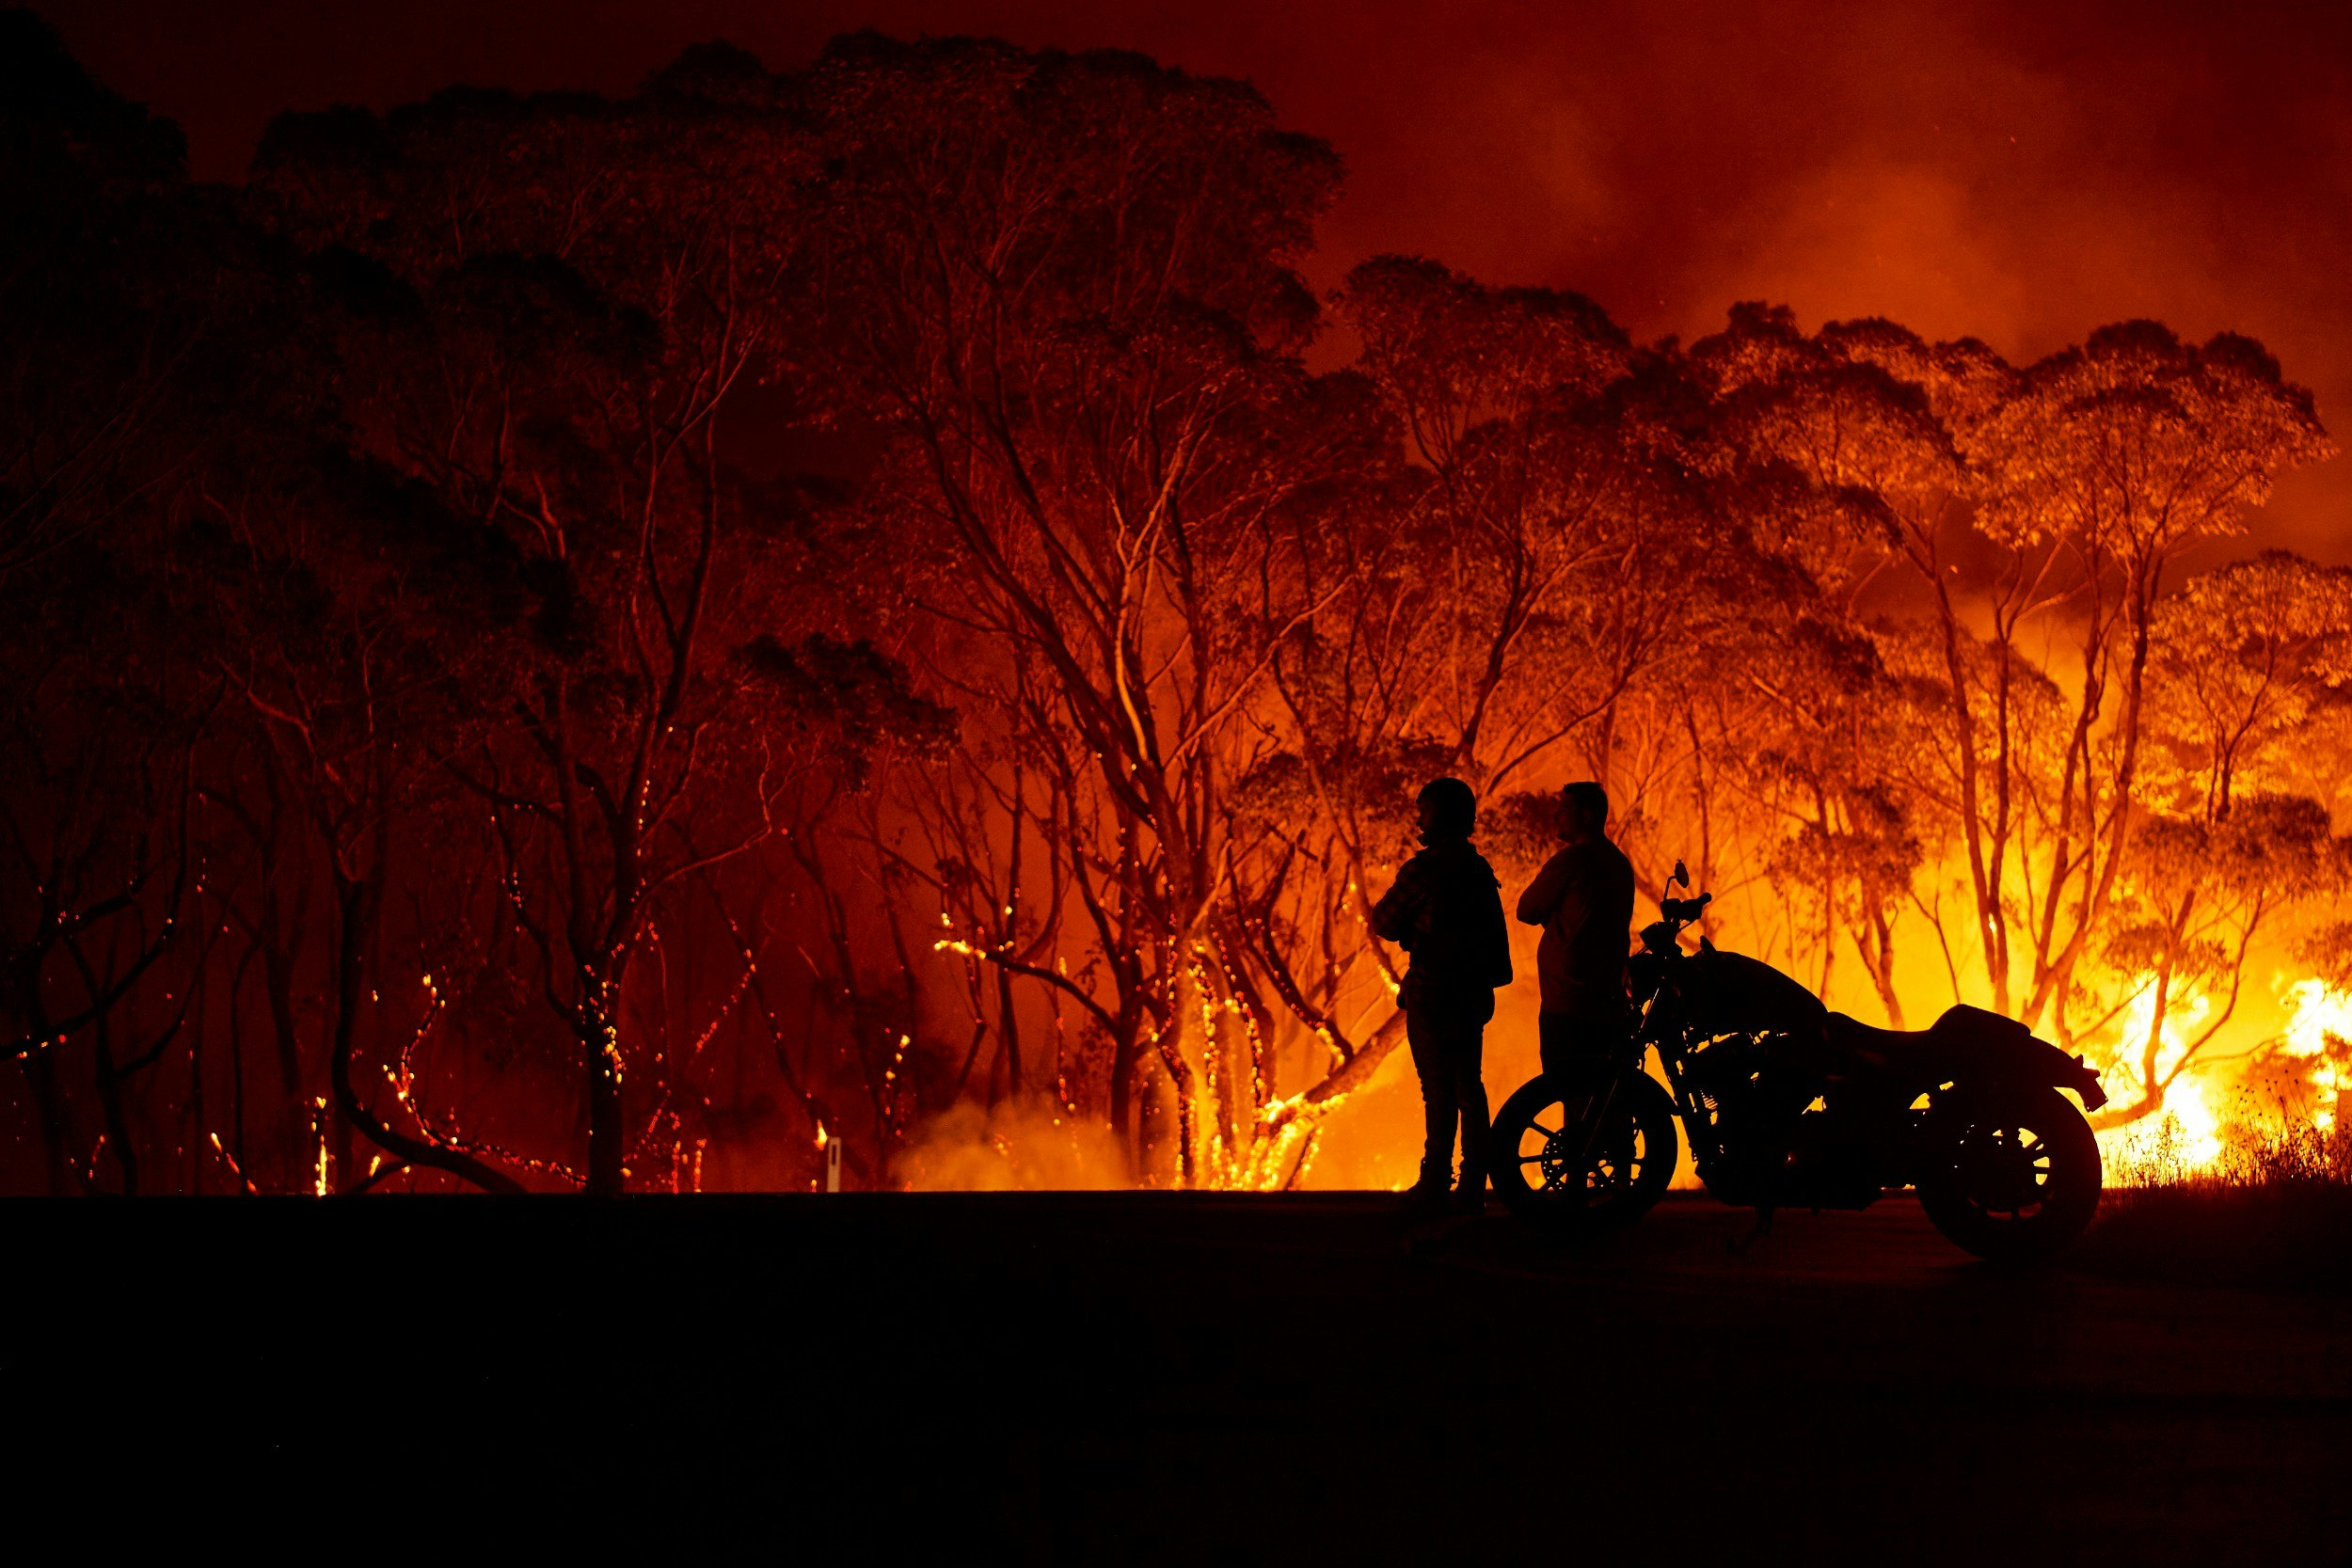 People looking on at the bushfires in Australia